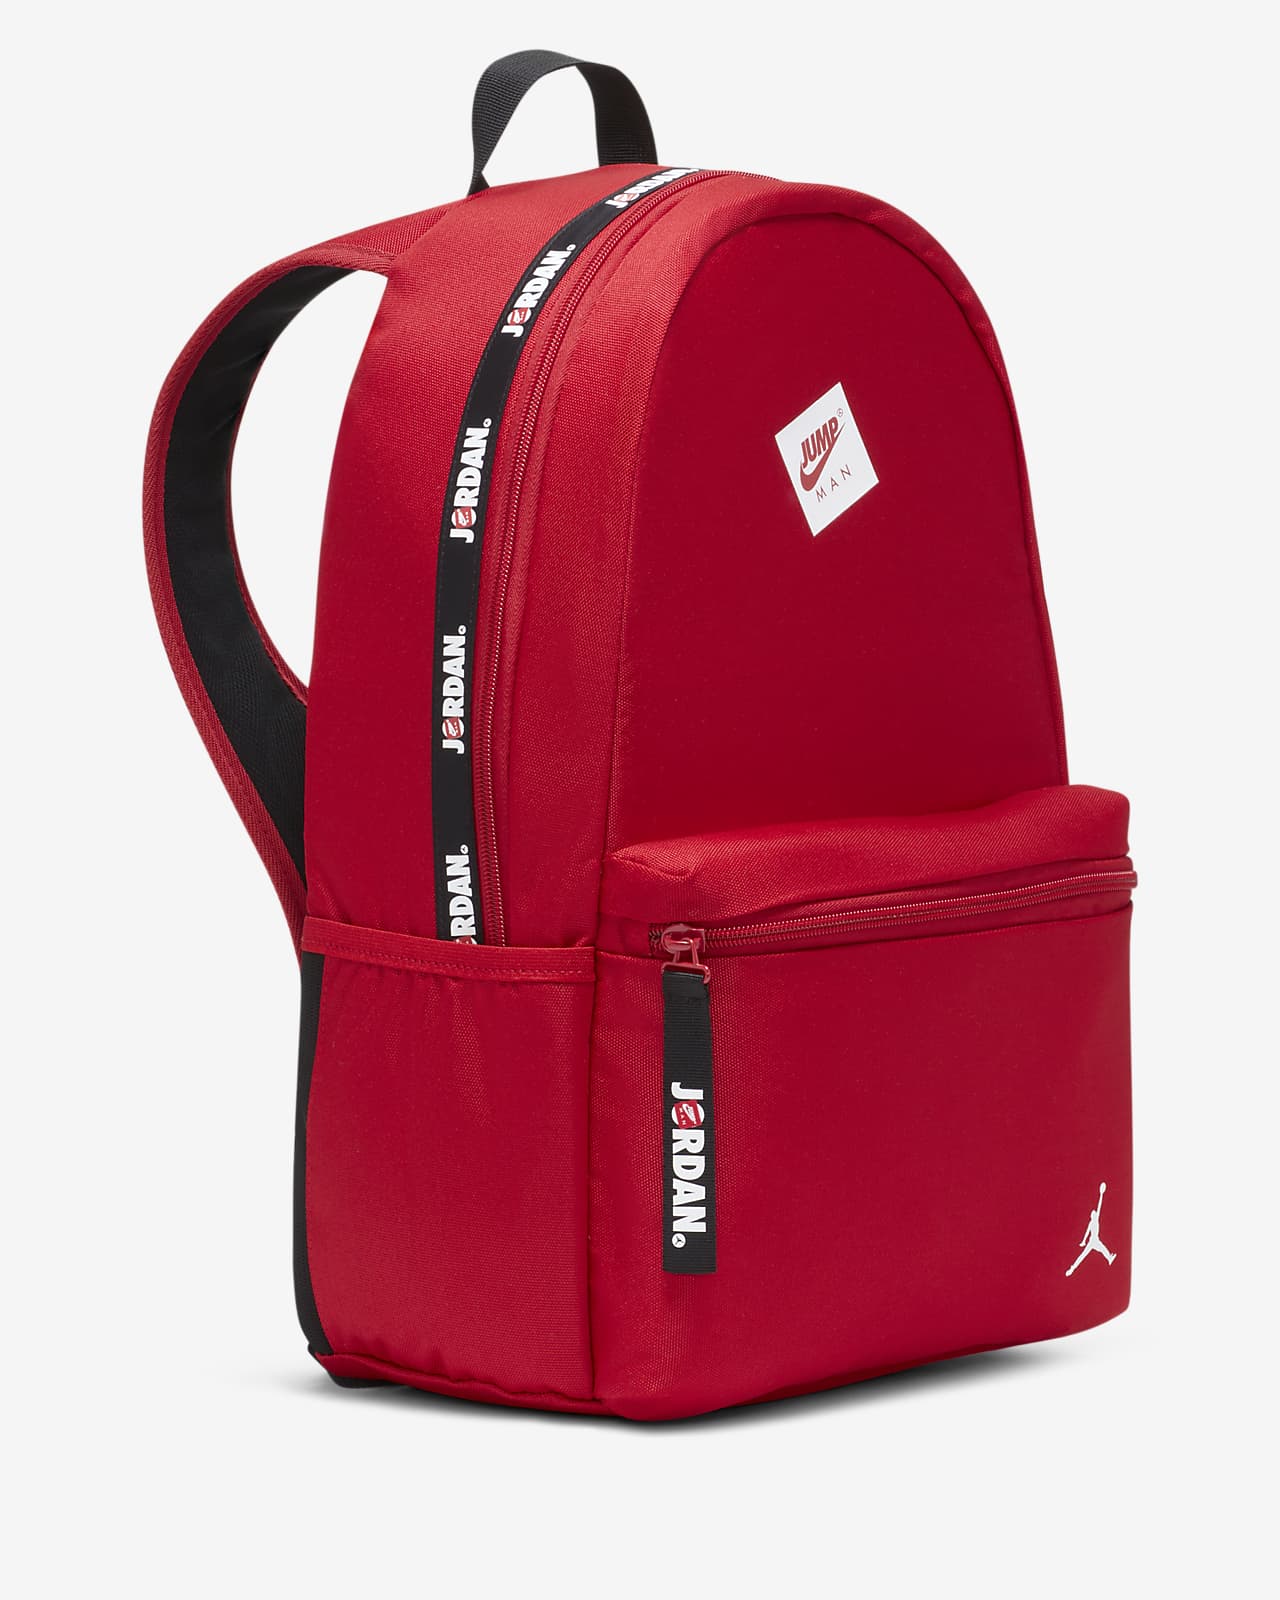 large jordan backpack